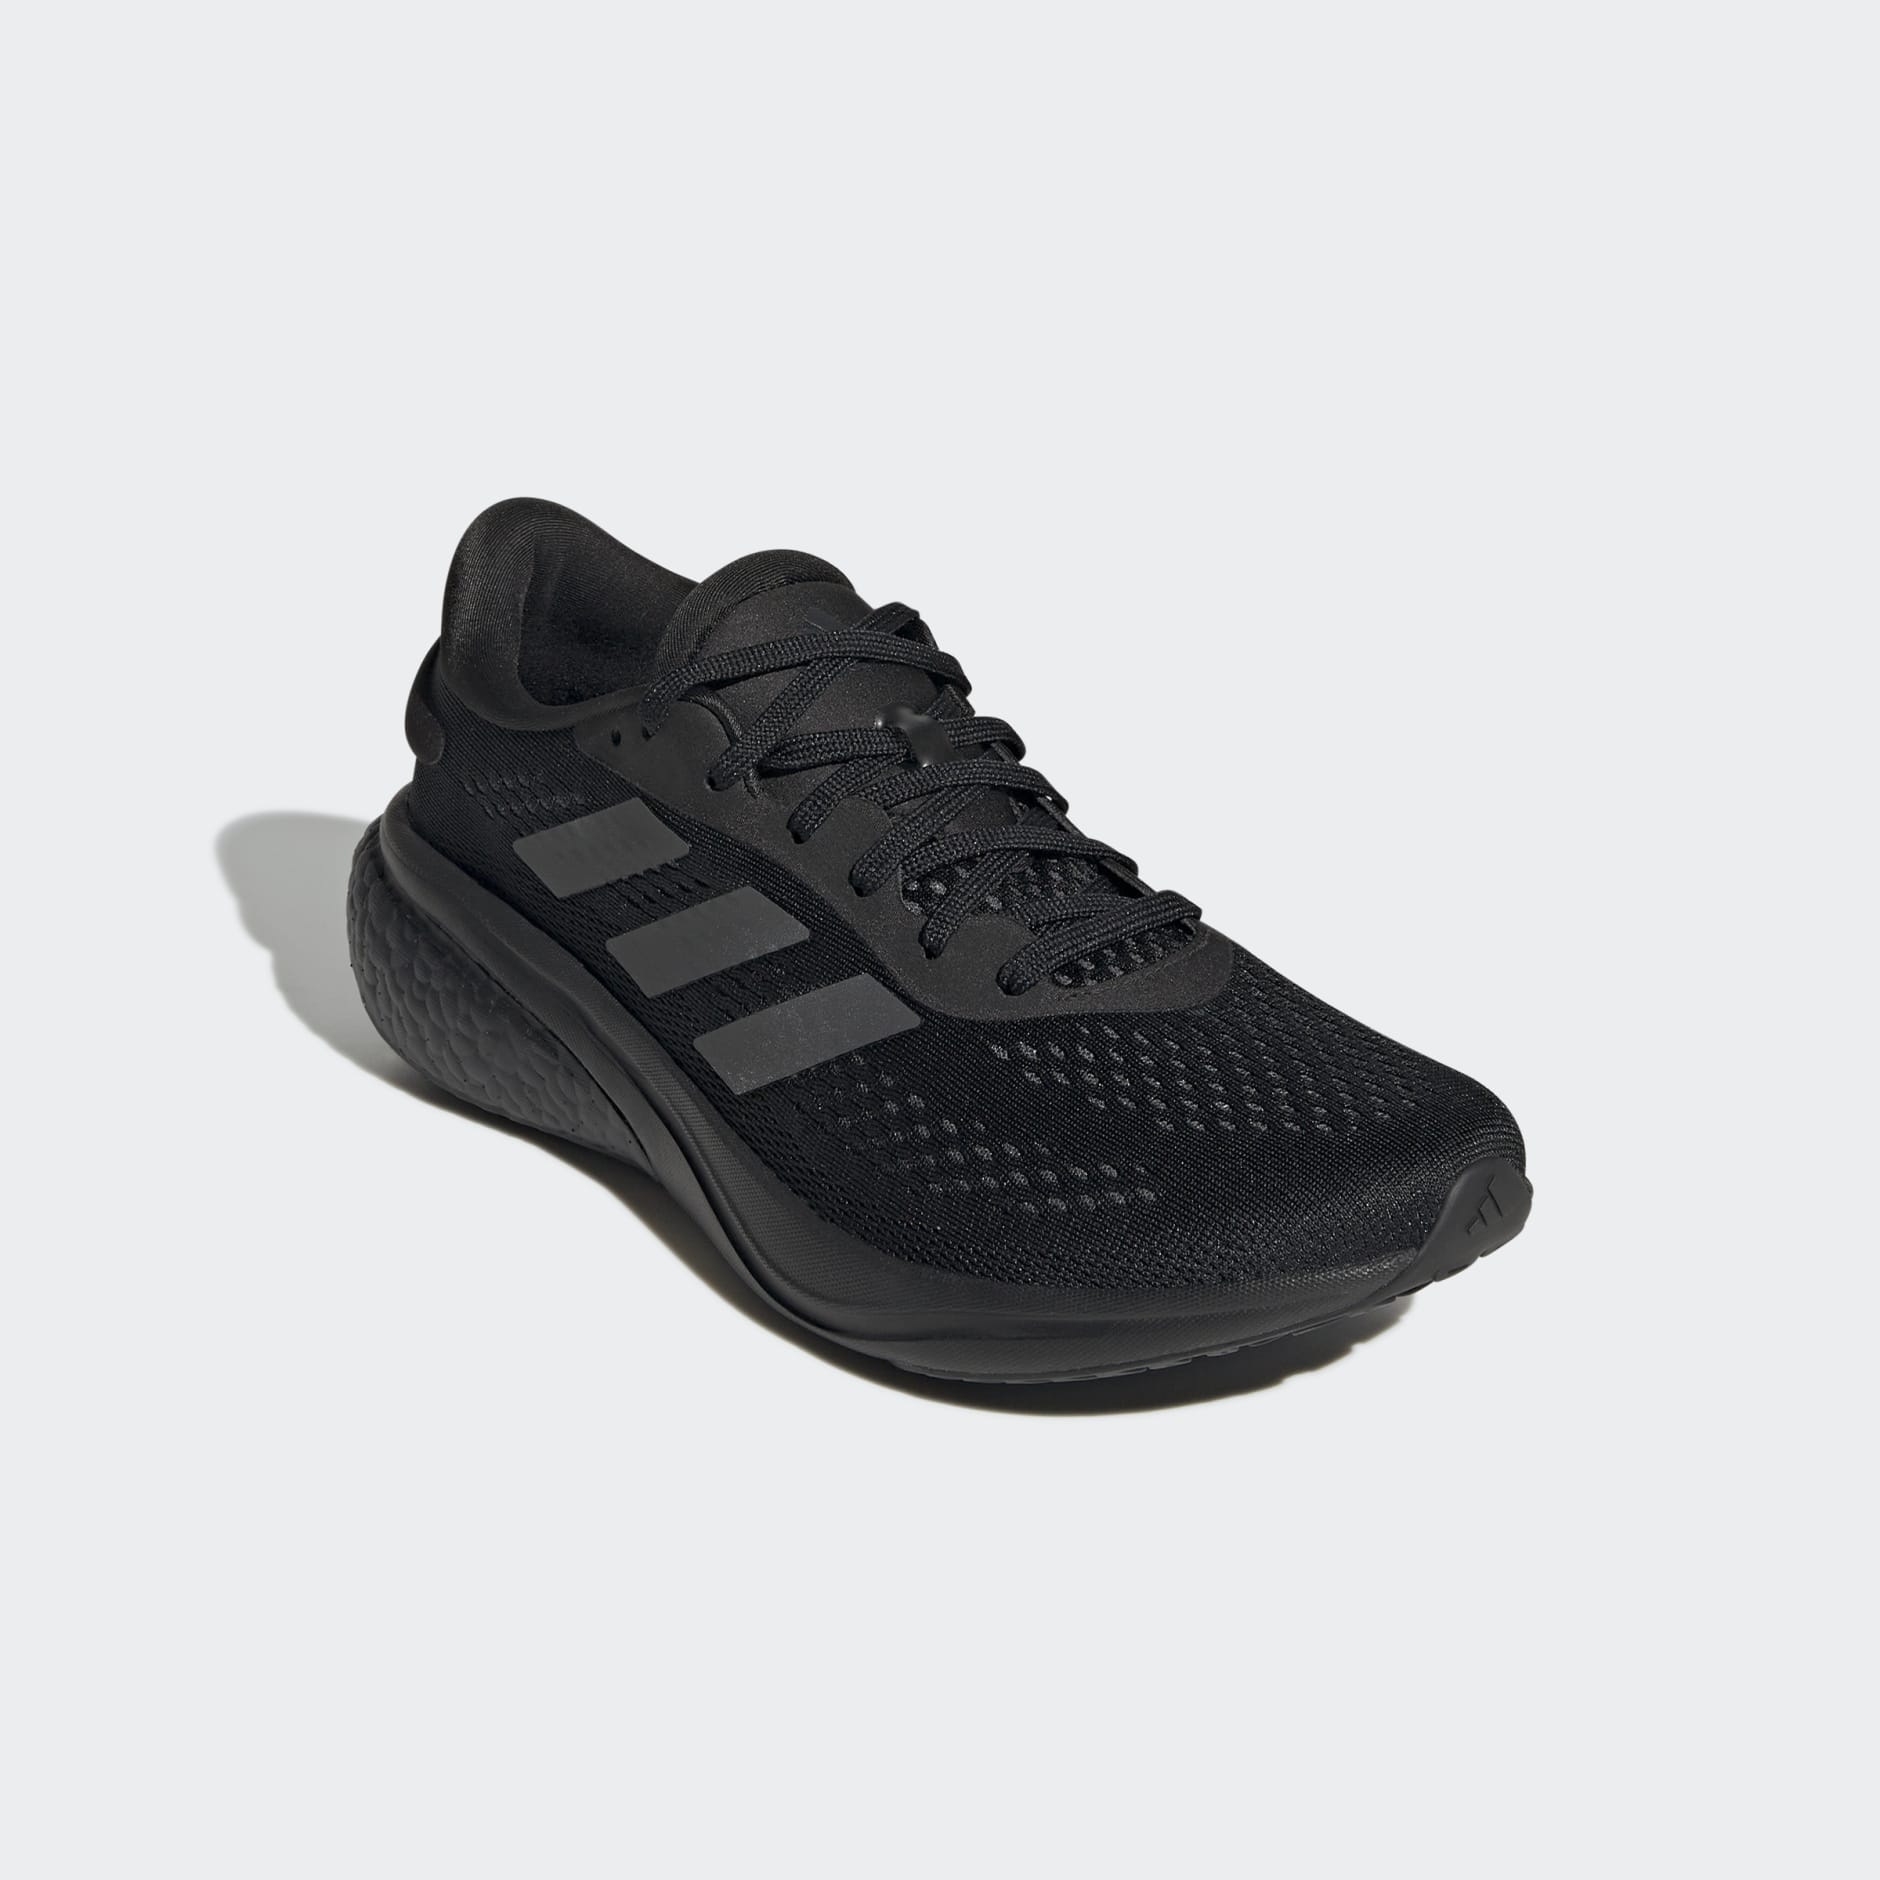 Men's Shoes - Supernova 2 Running Shoes - Black | adidas Qatar